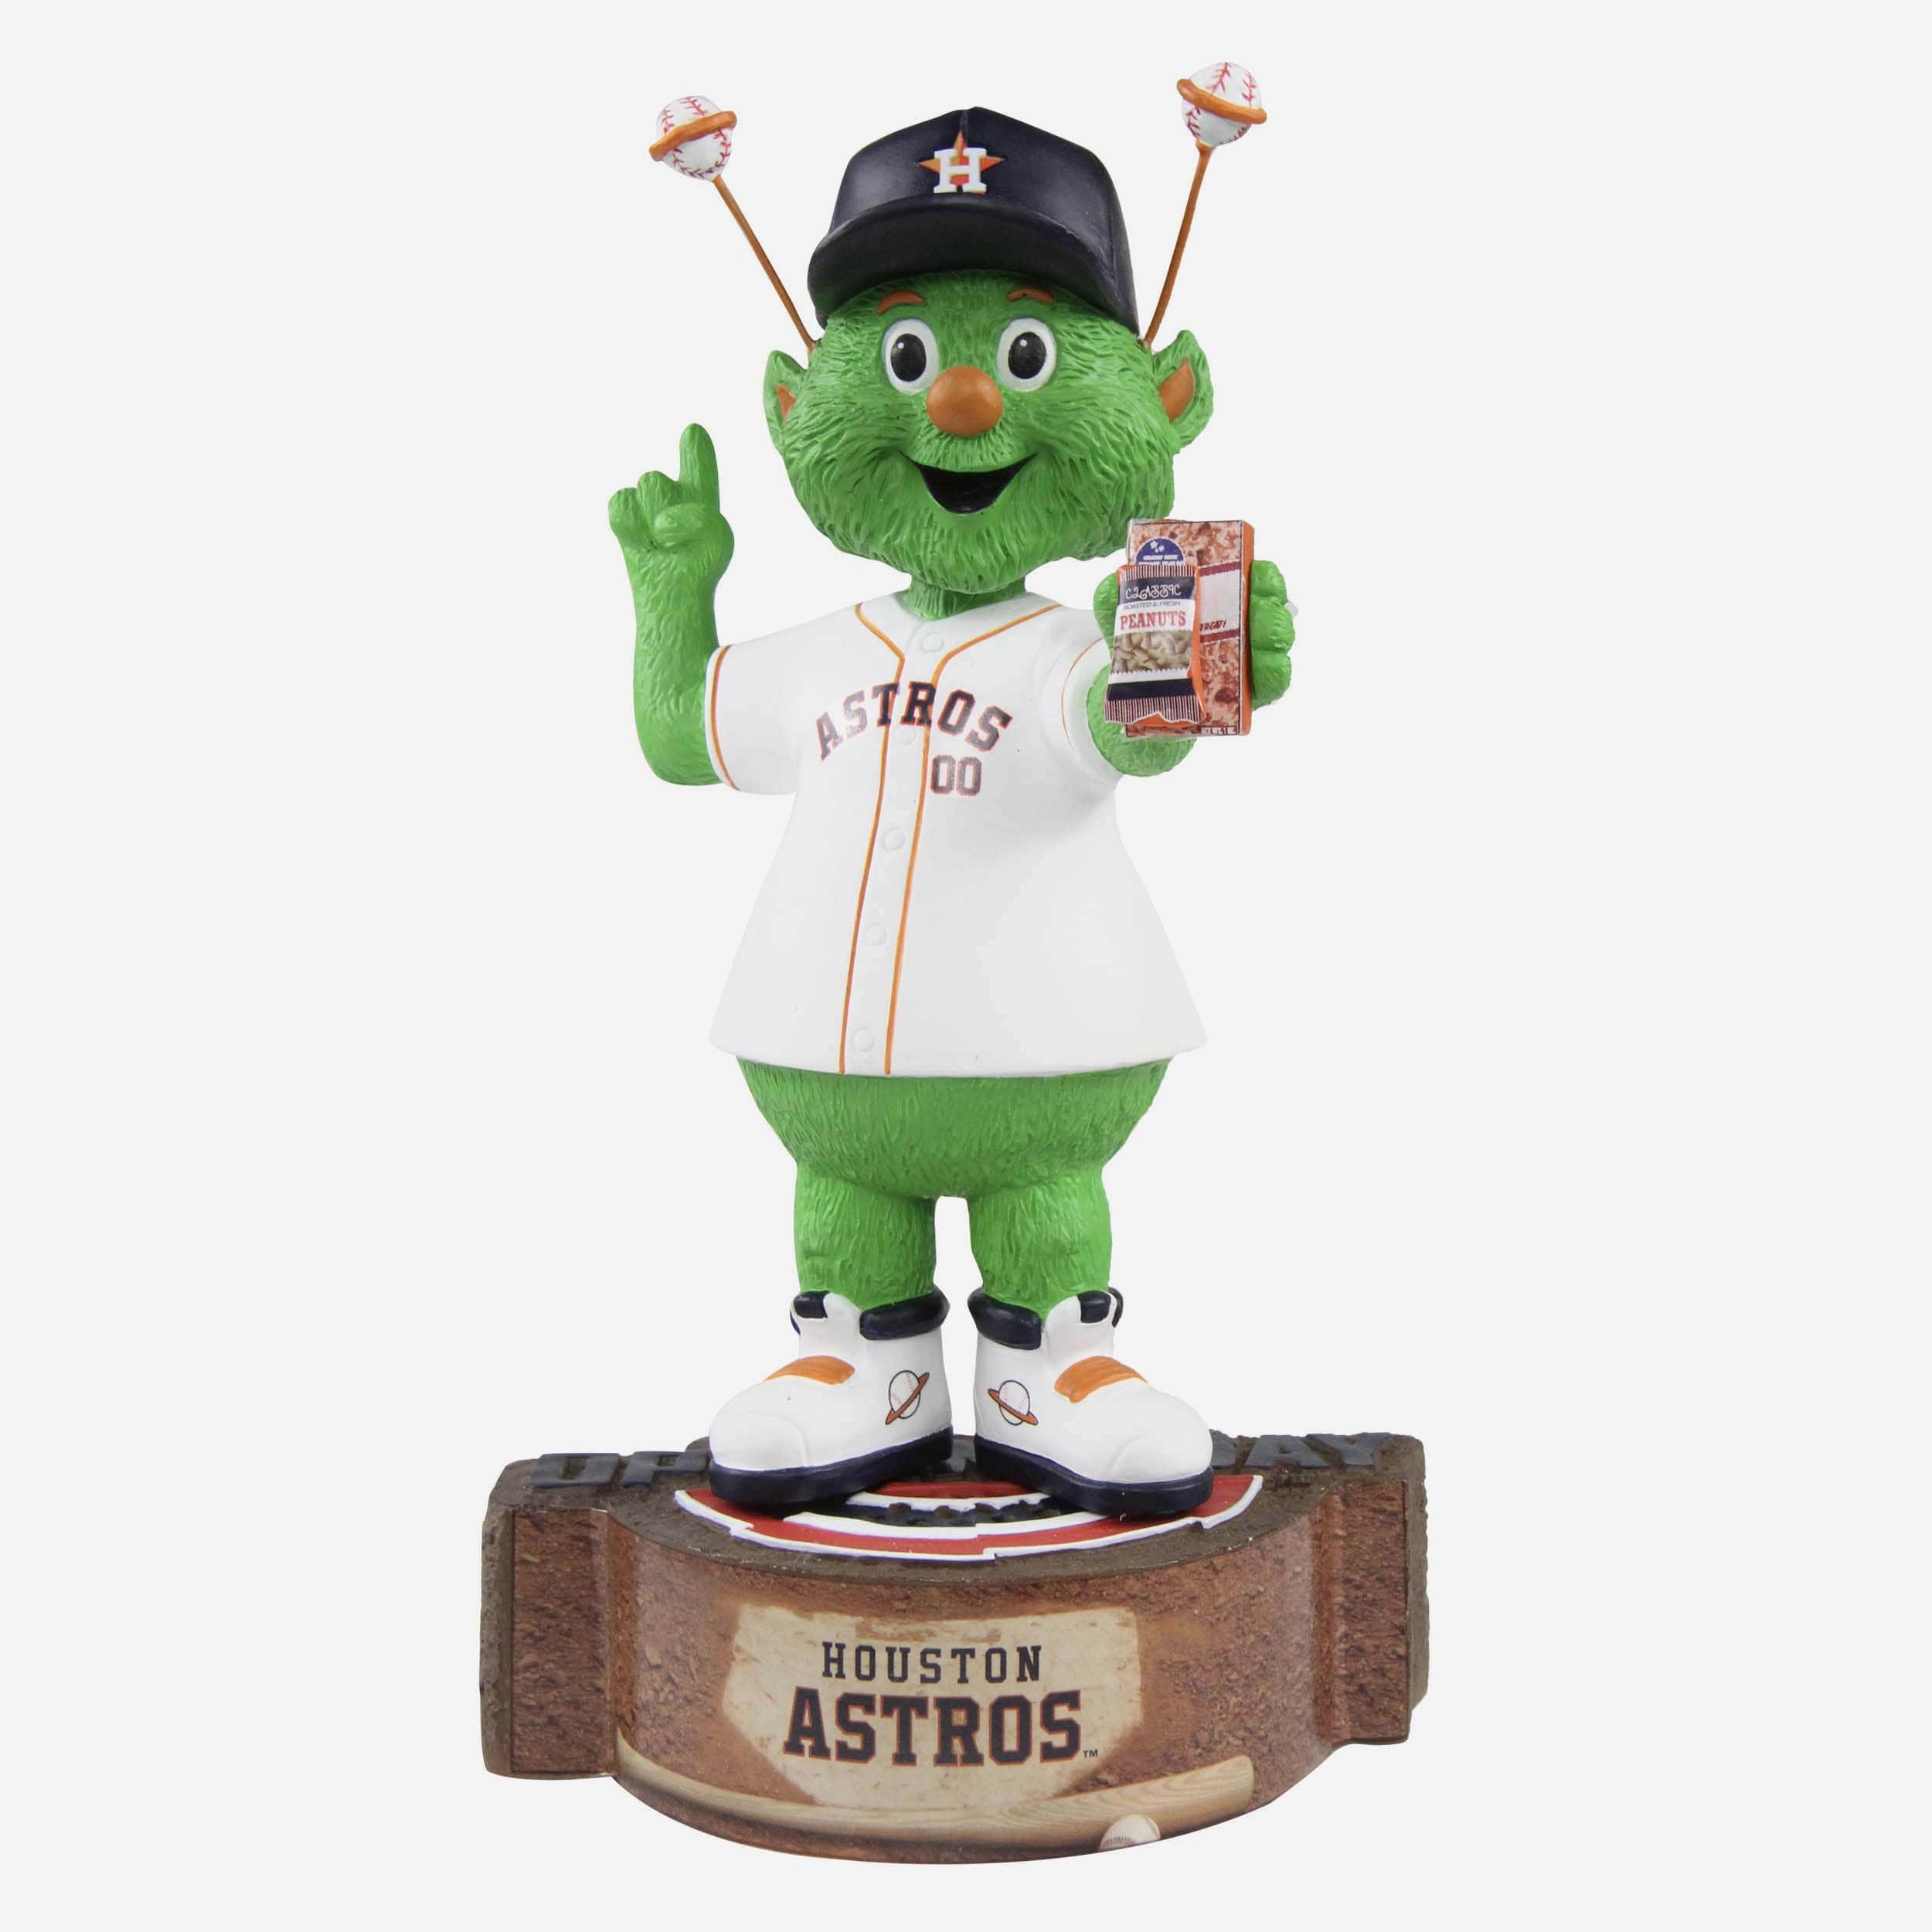 Hallmark MLB Houston Astros Mascot Orbit Special Itty Bittys Plush